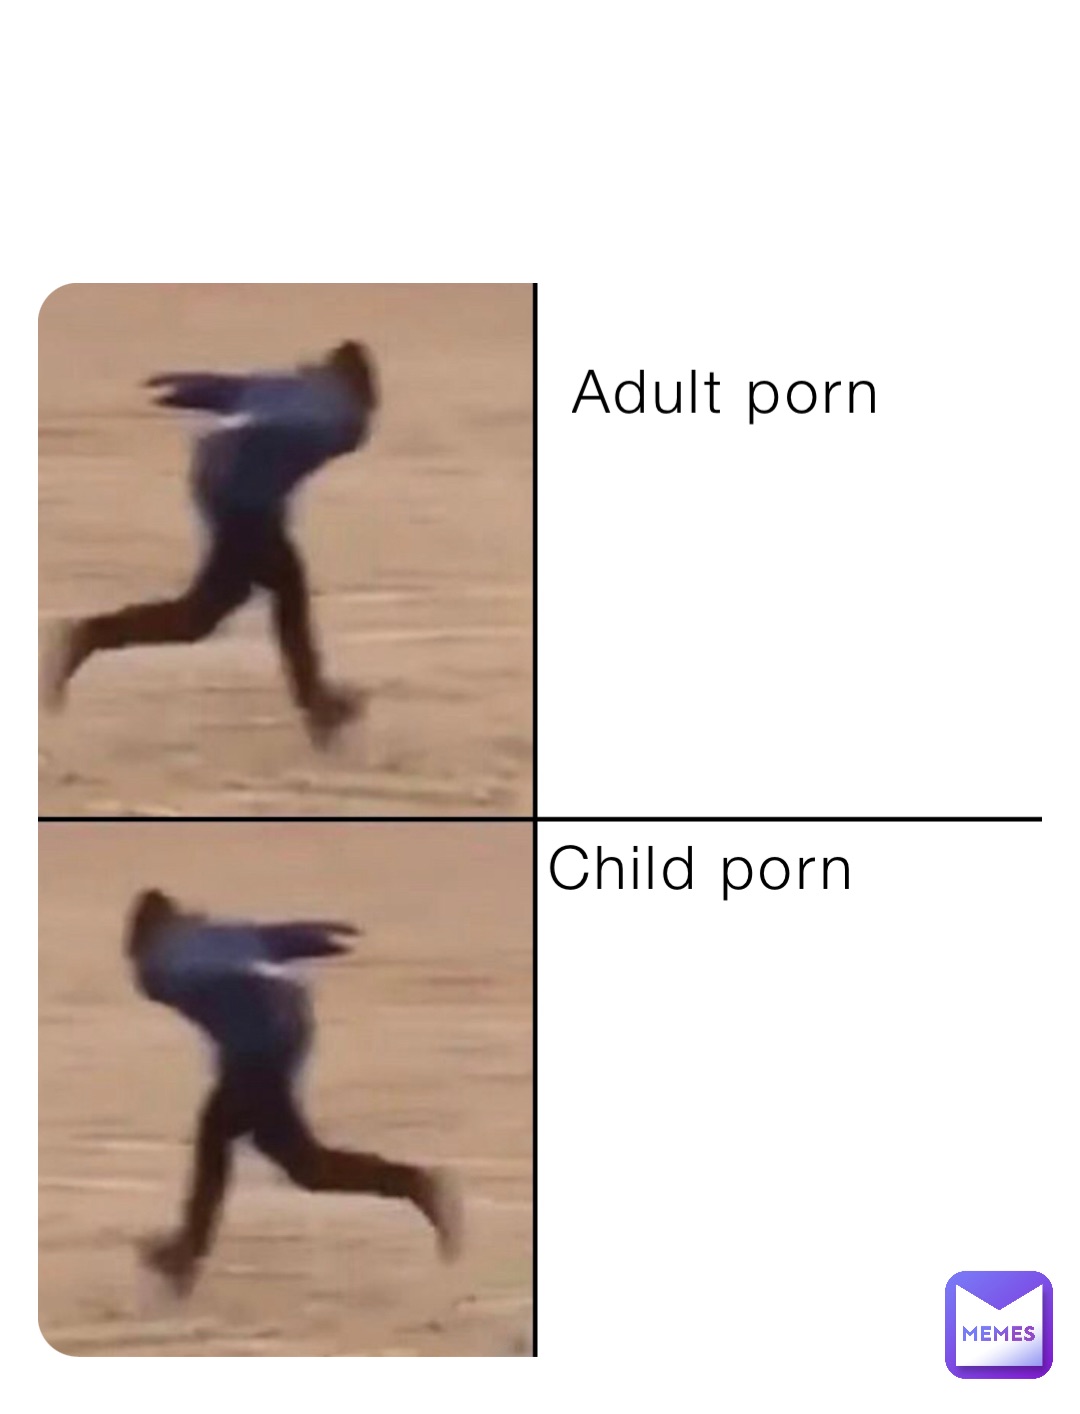 Adult porn memes